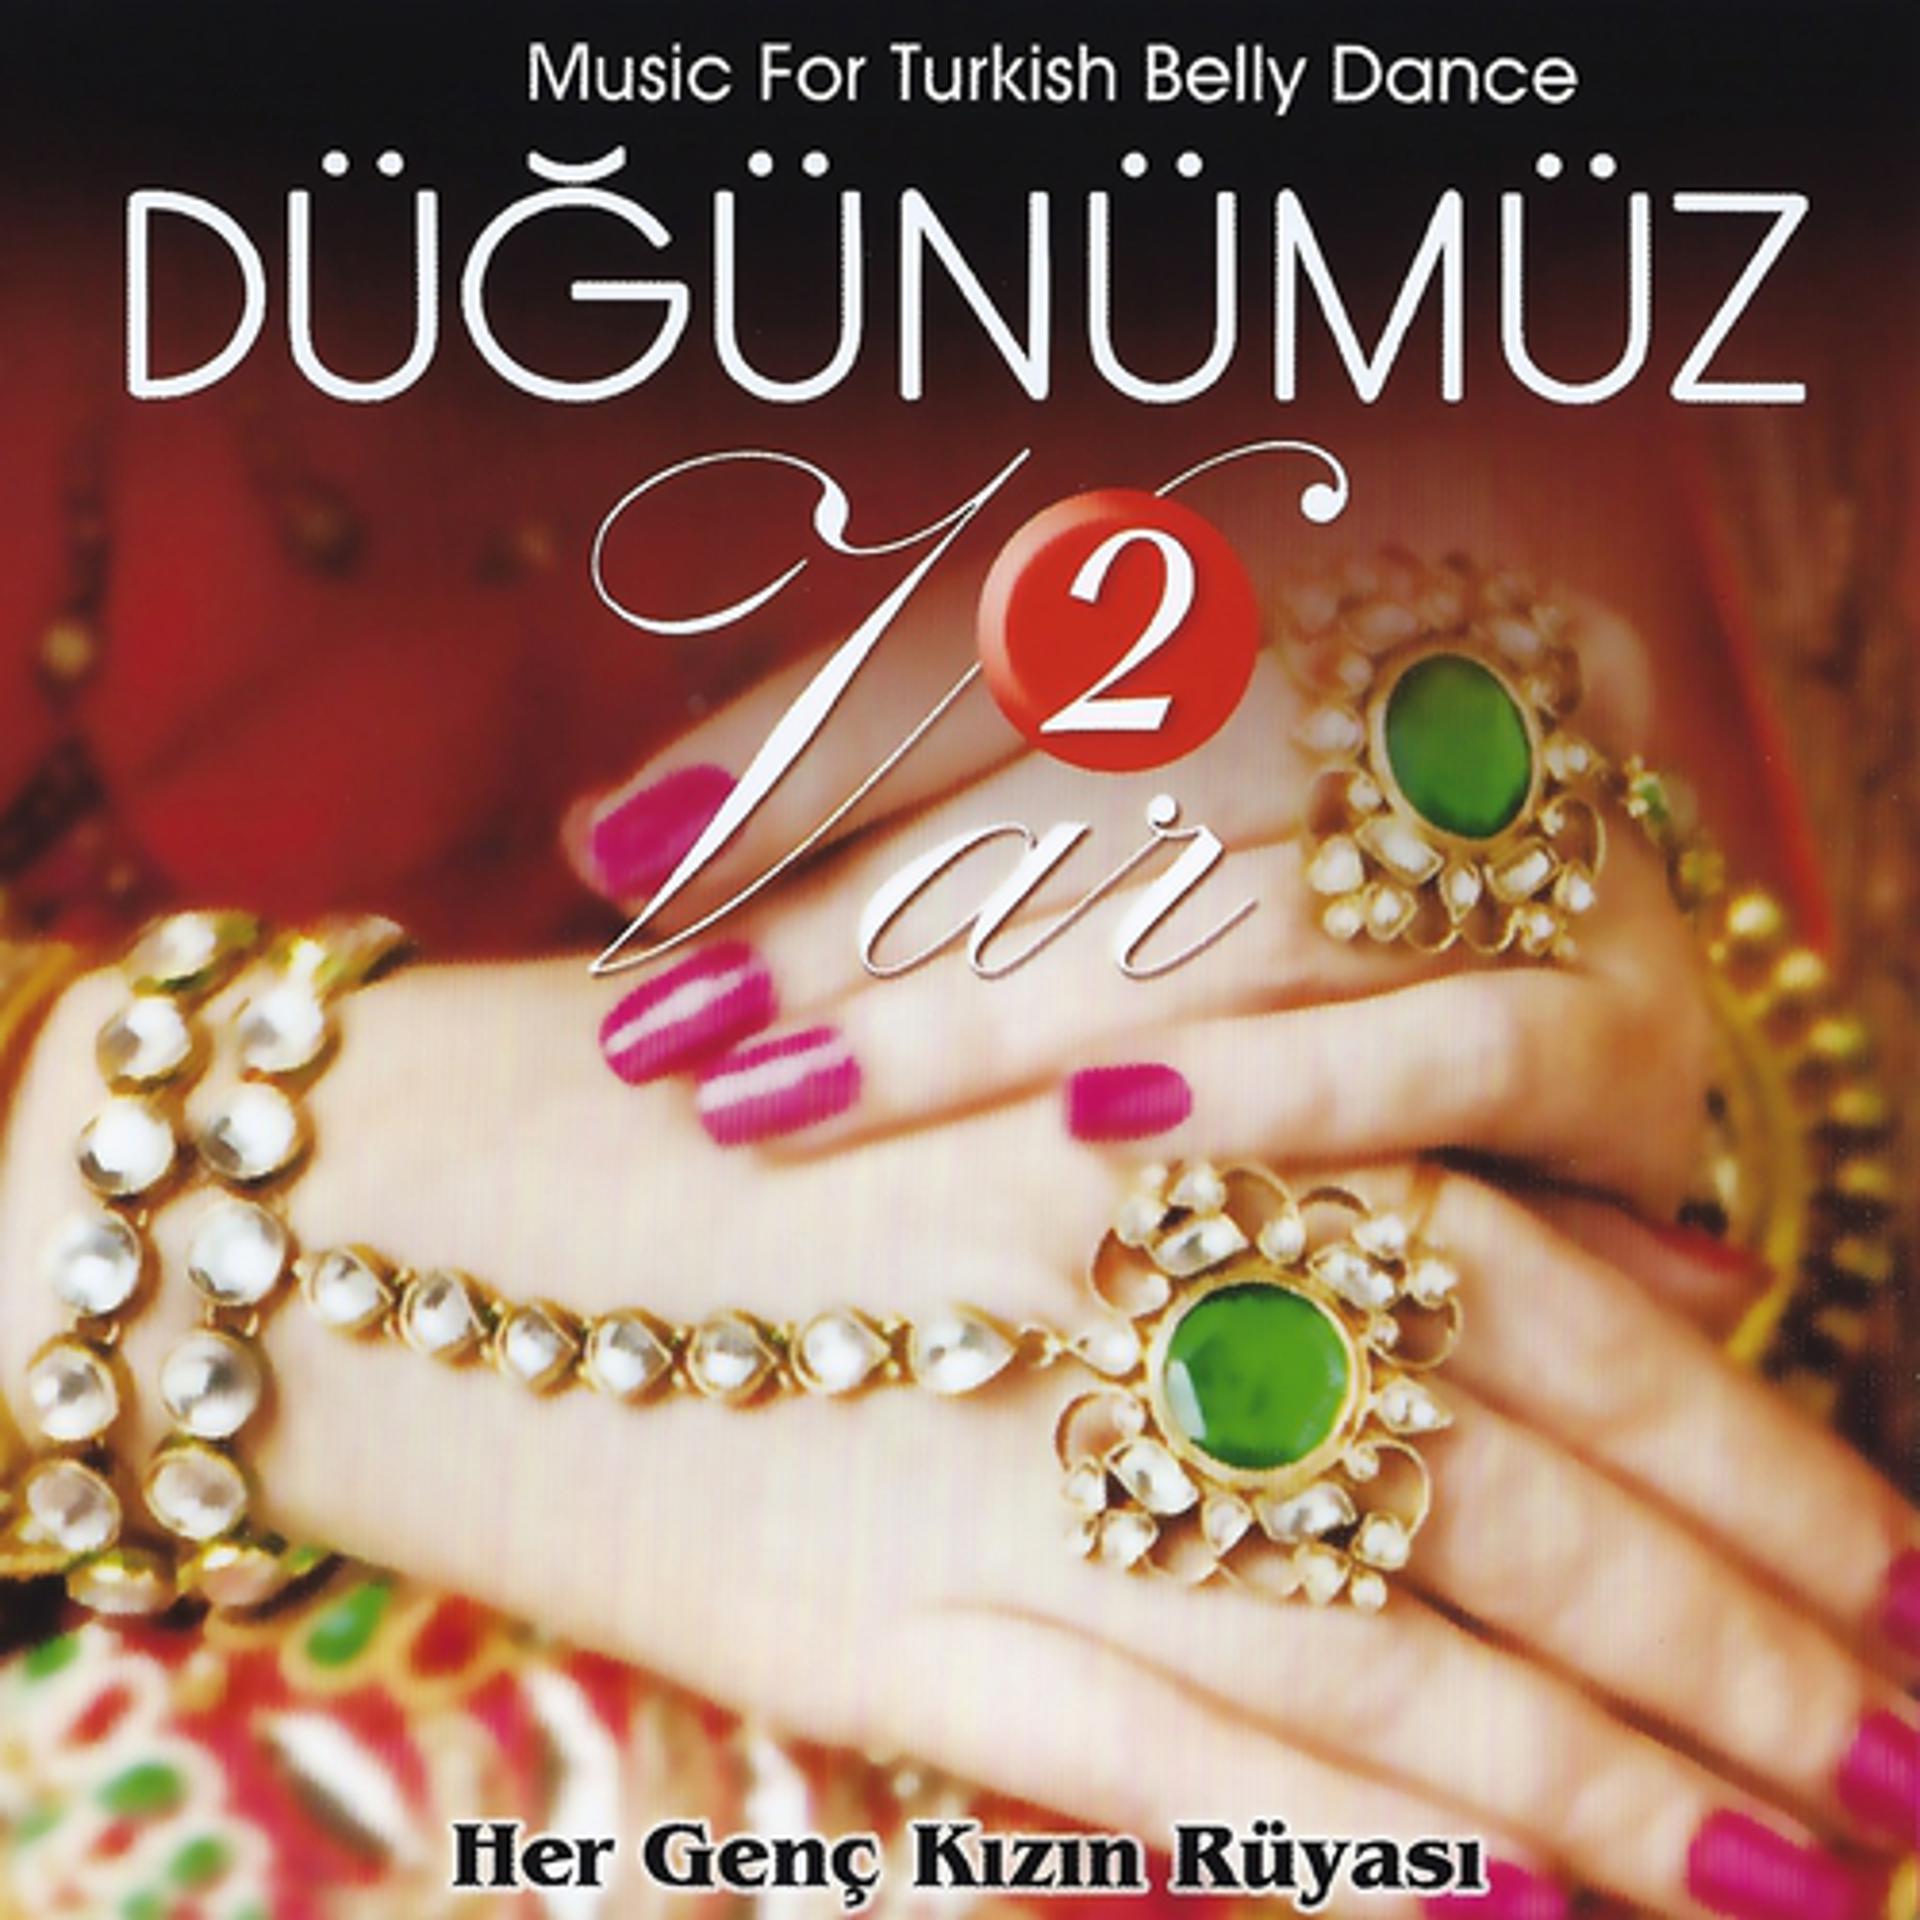 Постер к треку Hakan Kumru - Edirne